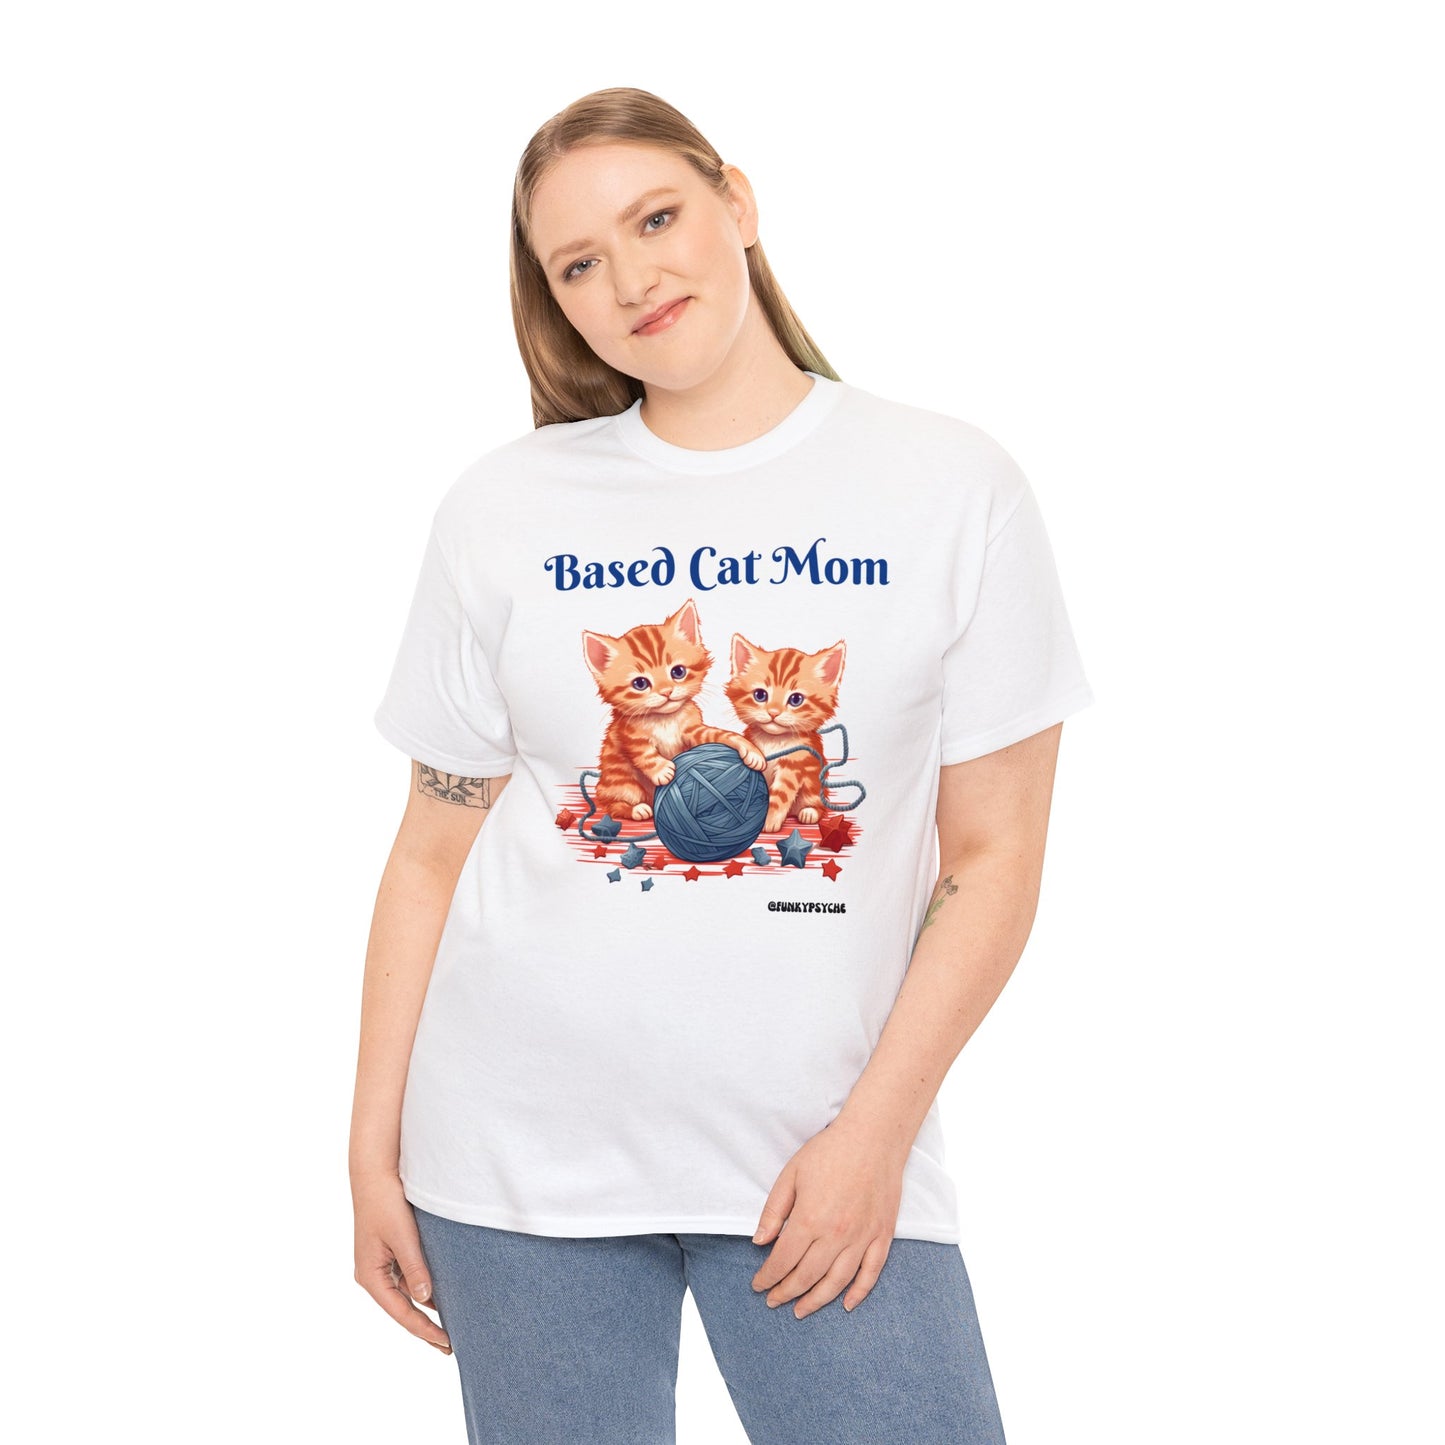 Based Cat Mom T-Shirt For Cat Lovers